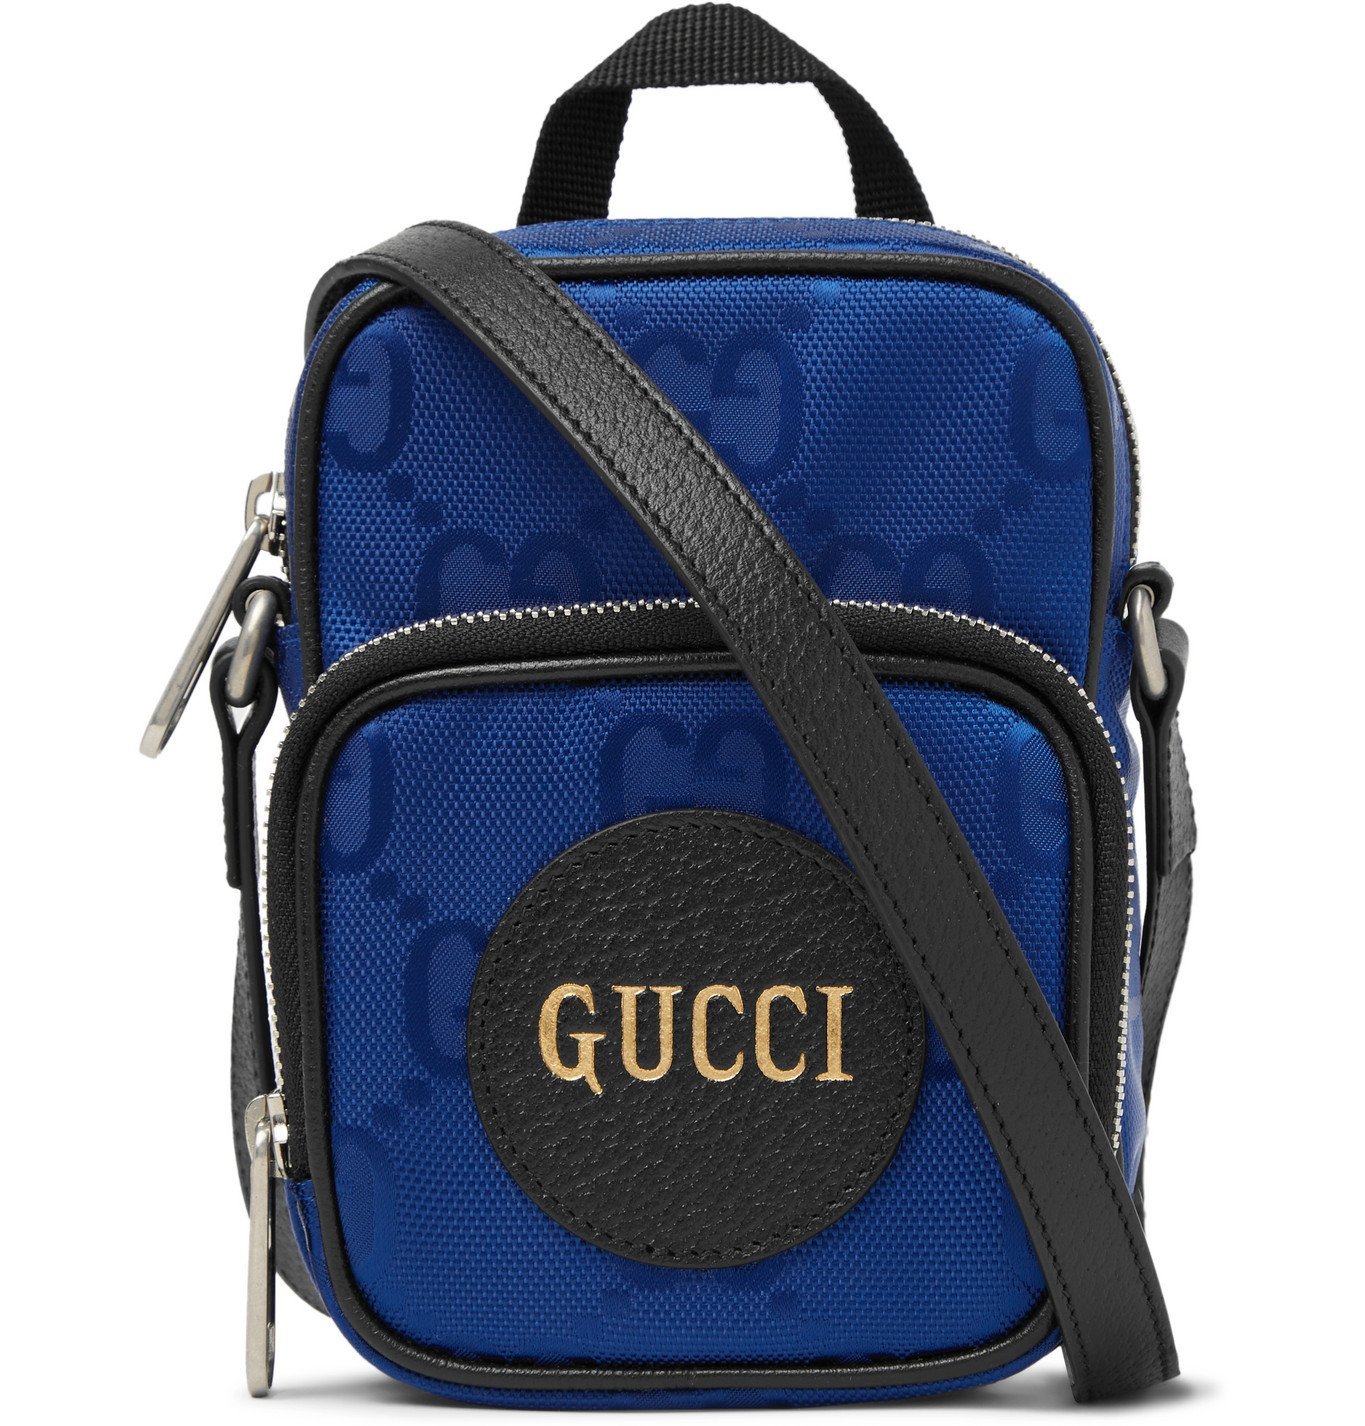 gucci messenger bag blue